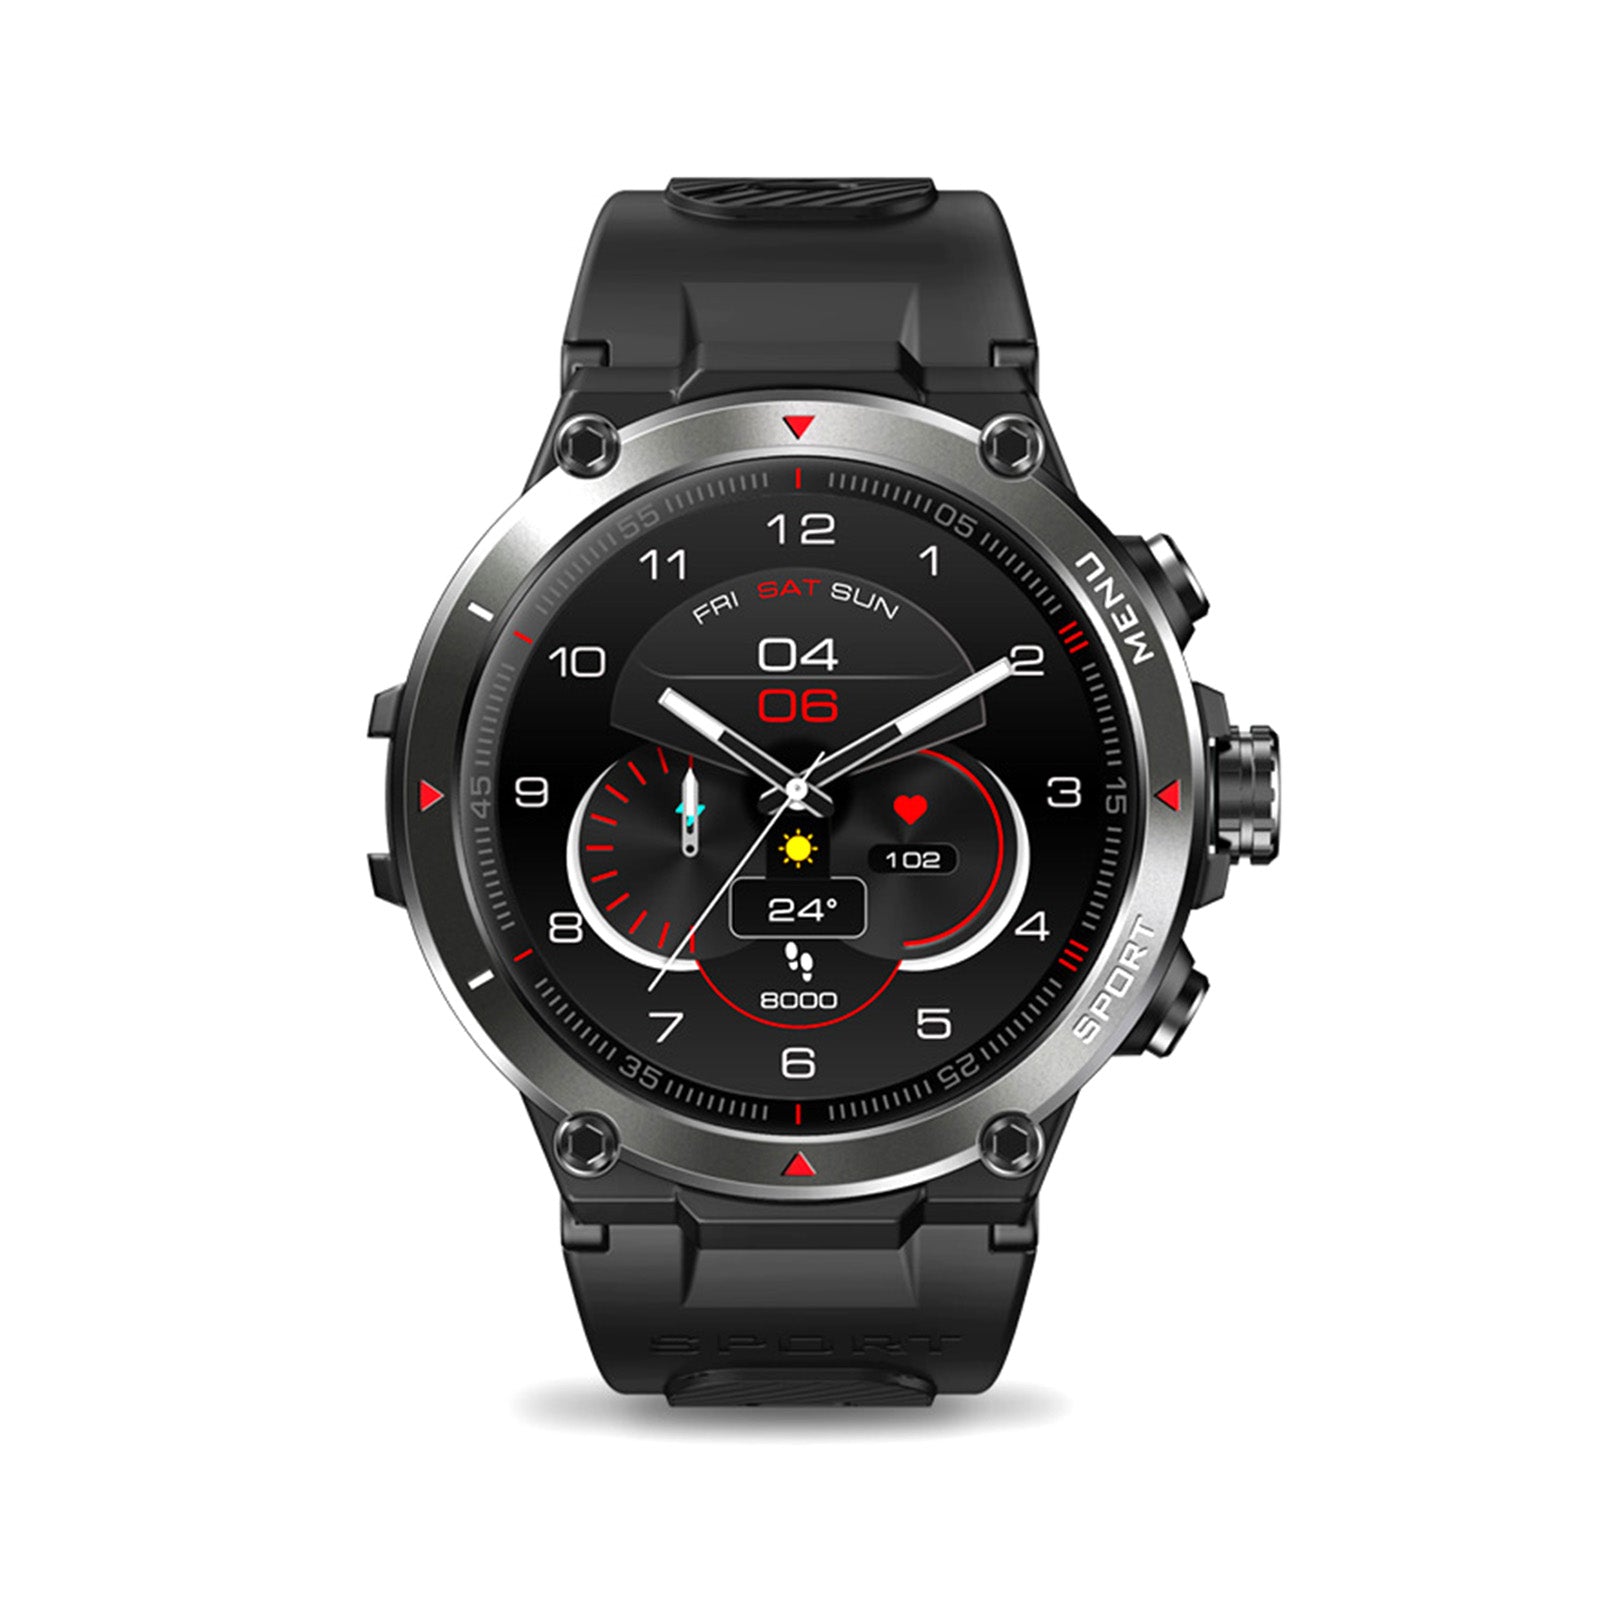 Zeblaze Stratos 2 GPS-Smartwatch, AMOLED-Display, IOS / ANDROID ,24-Stunden-Gesundheitsmonitor, 5 ATM, lange Akkulaufzeit, Smartwatch